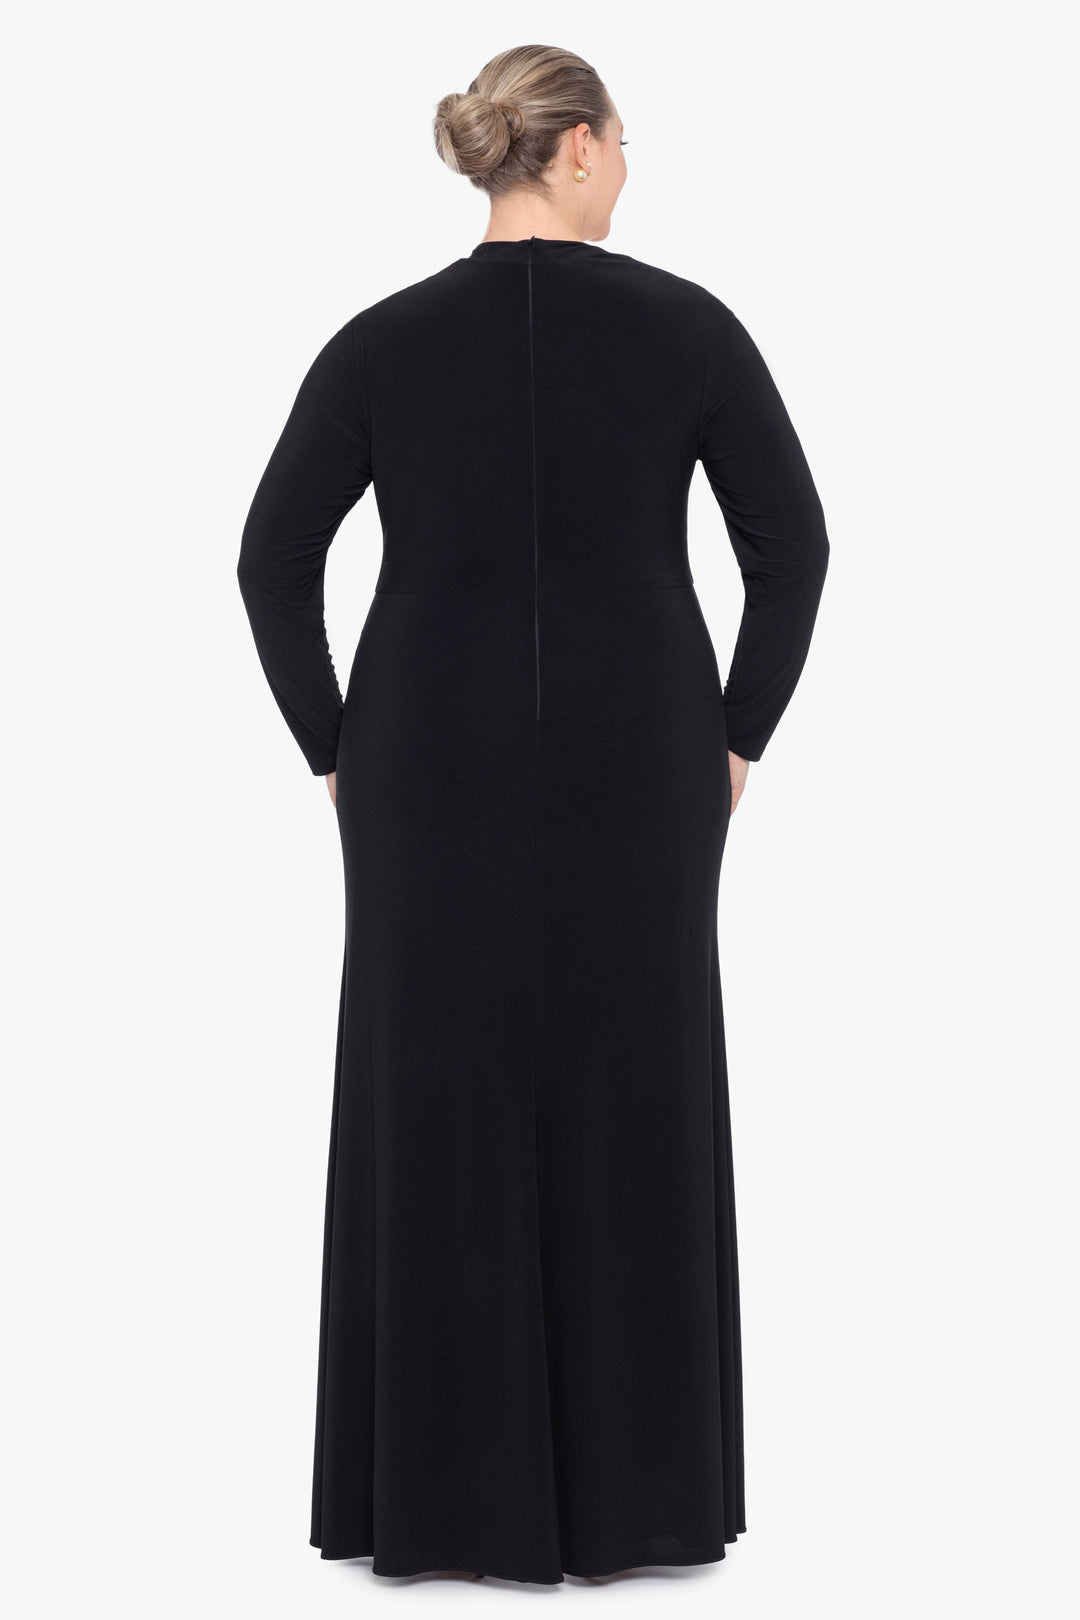 Plus "Adelyn" Long Sleeve Jersey Knit Asymmetrical Neck Dress